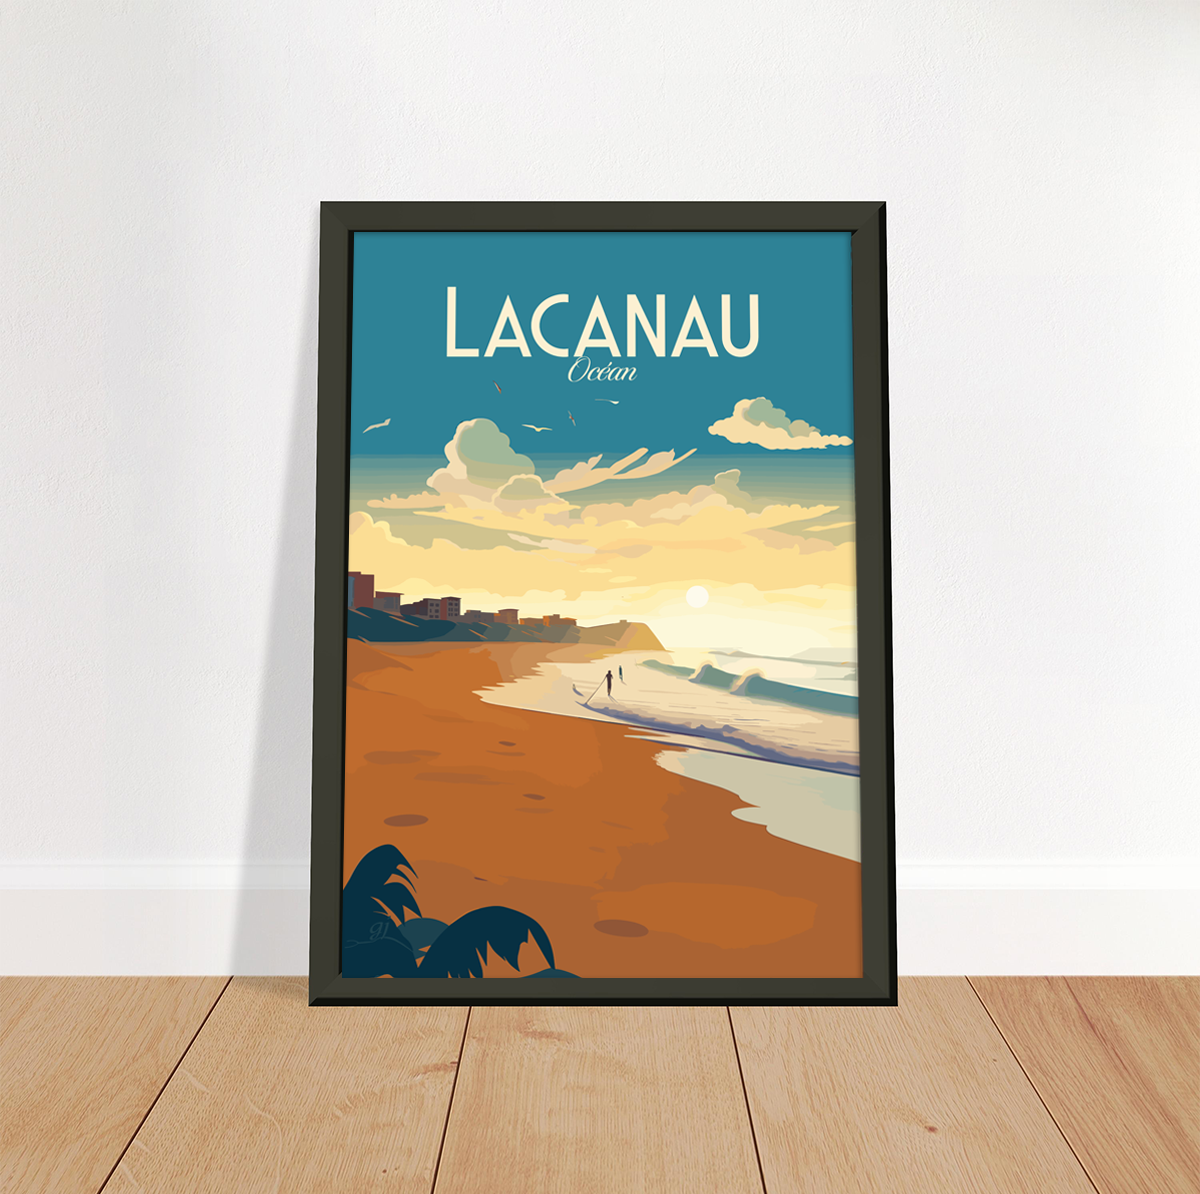 Lacanau poster by bon voyage design